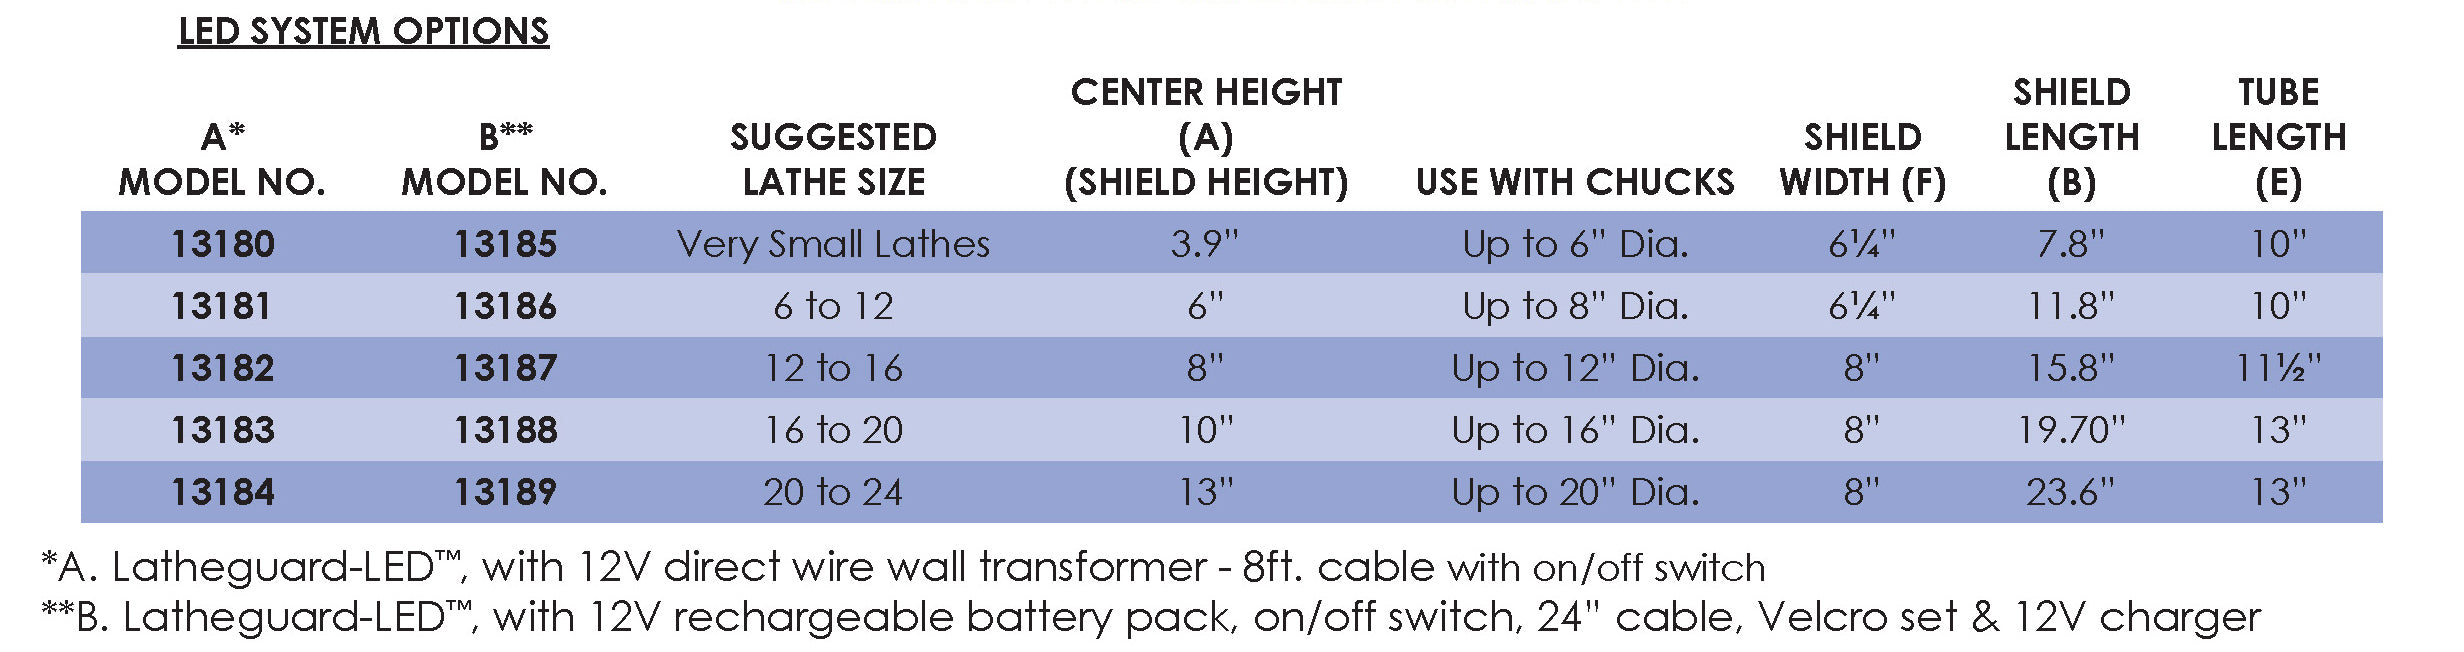 Latheguard-LED - Large - 12V Rechargeable Battery Pack